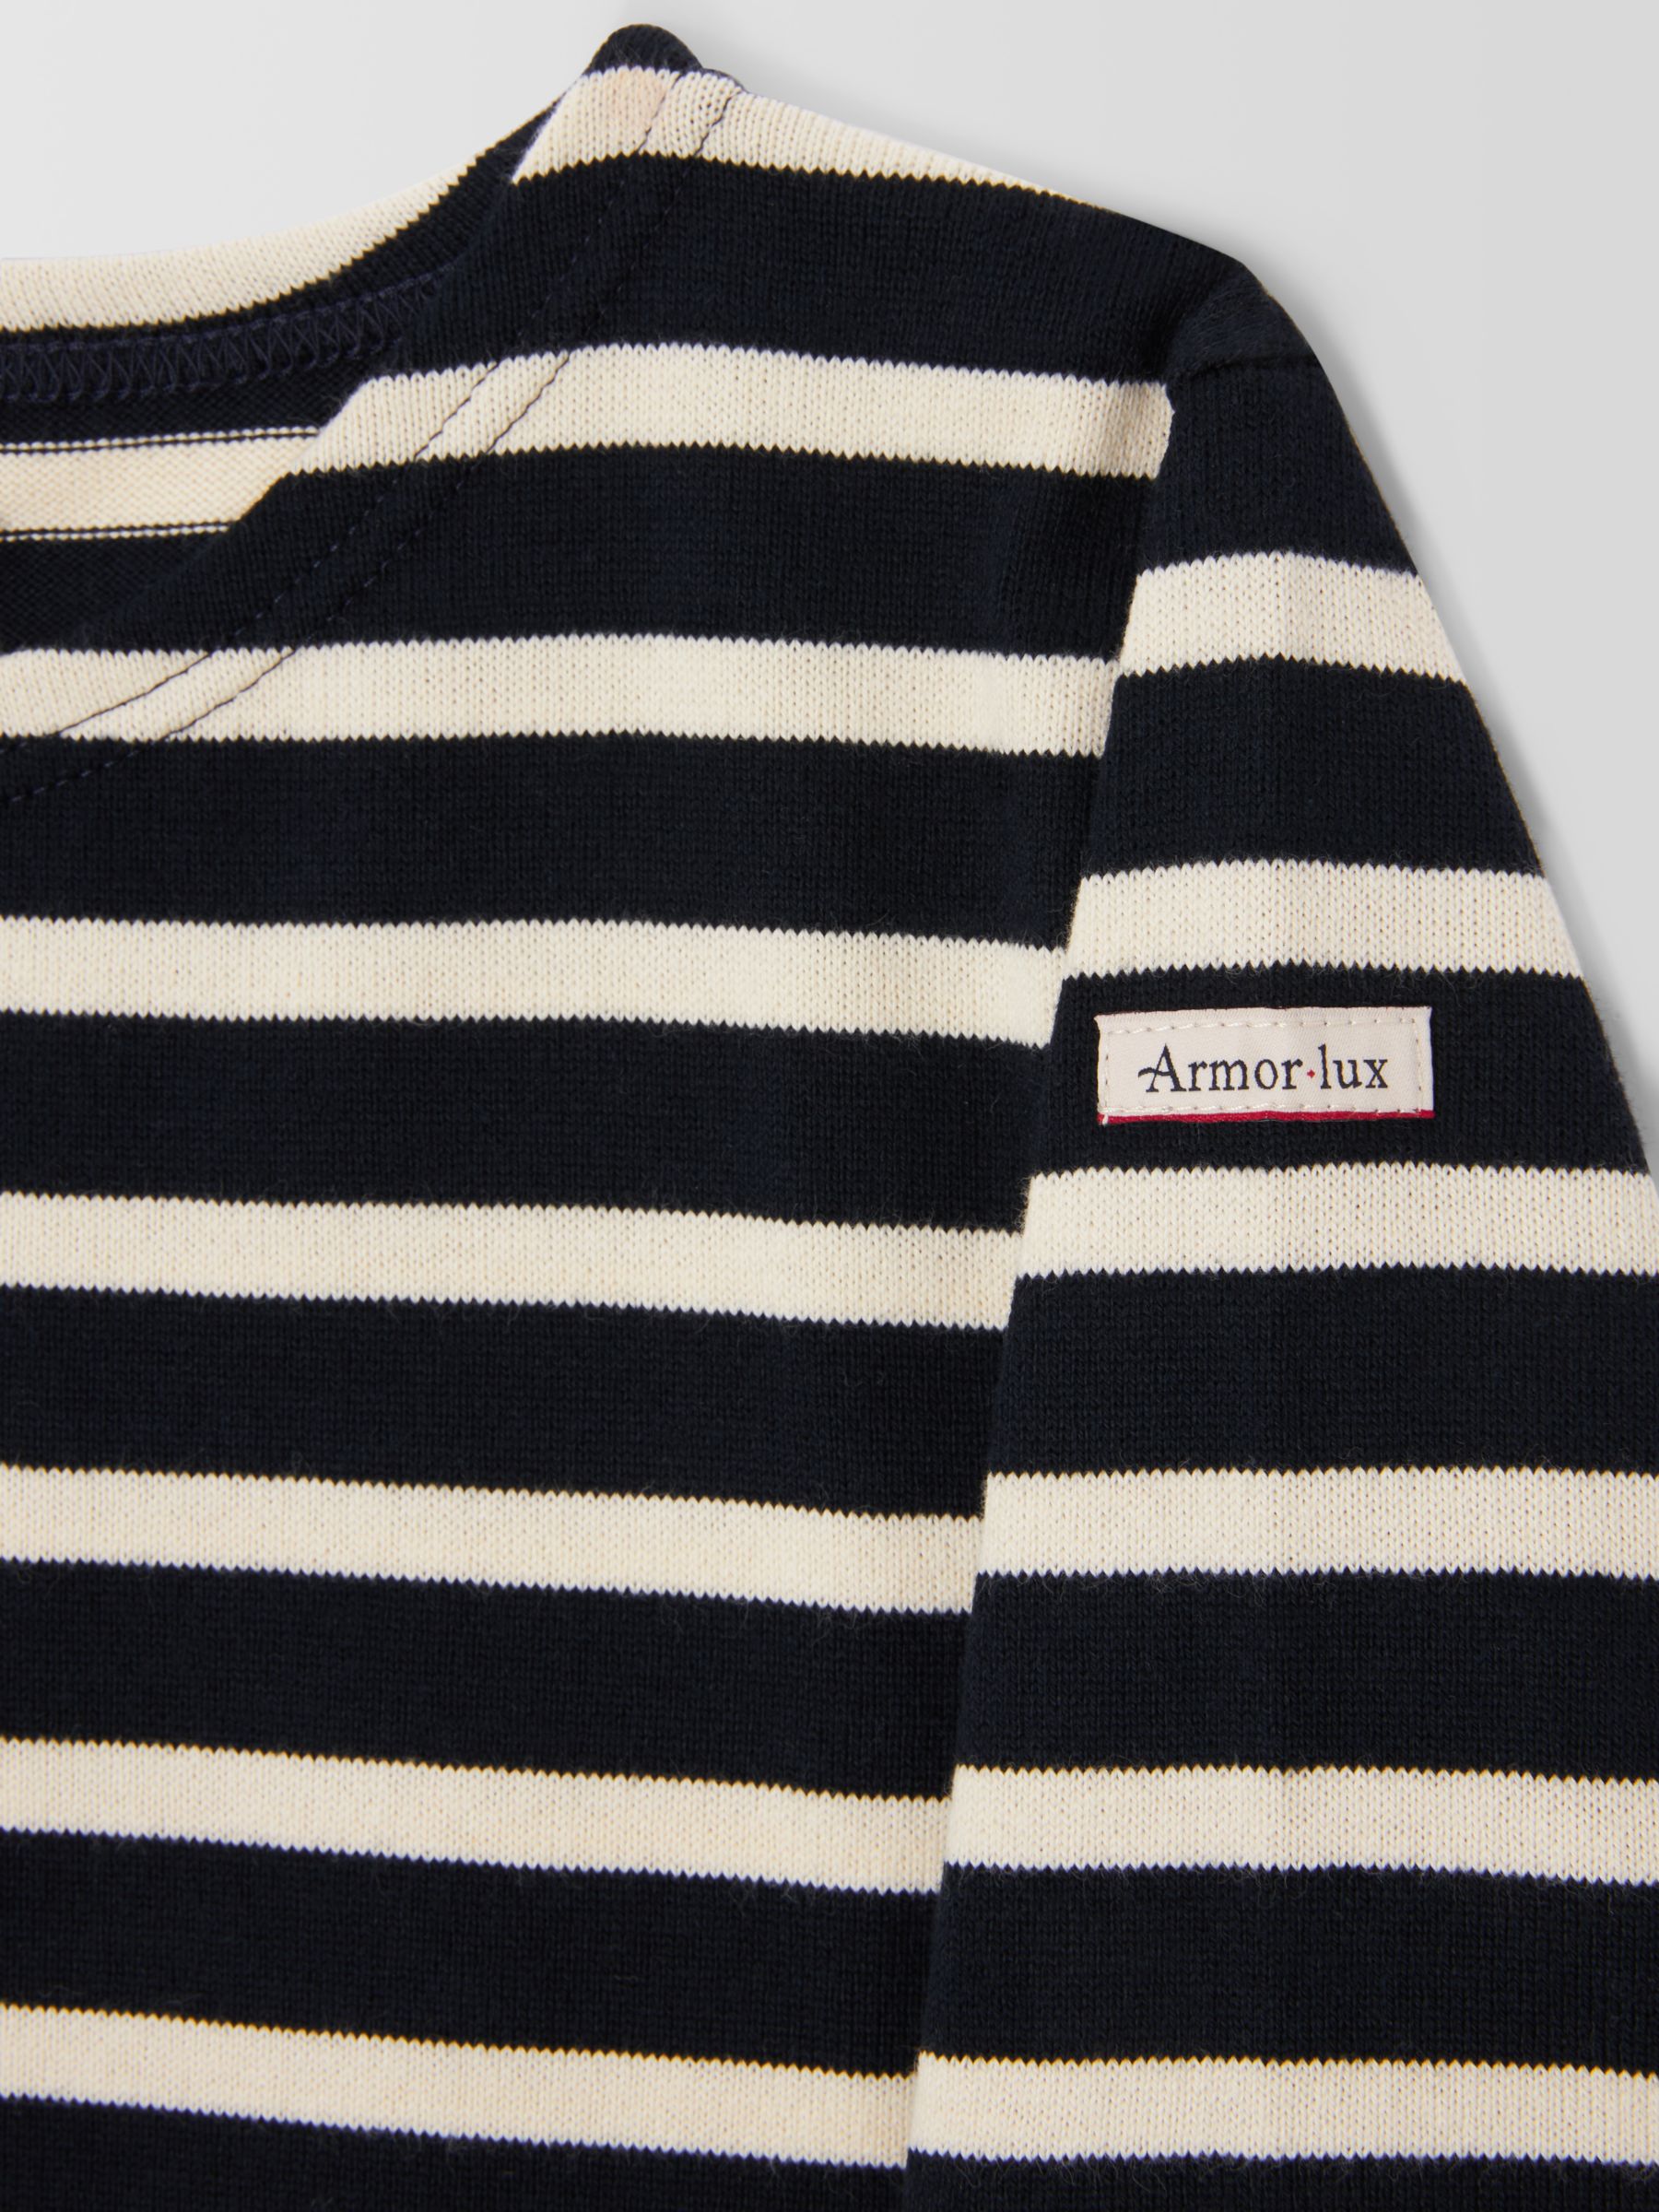 Armor Lux Breton Stripe Long Sleeve T-Shirt, Navy/Cream, 8 years